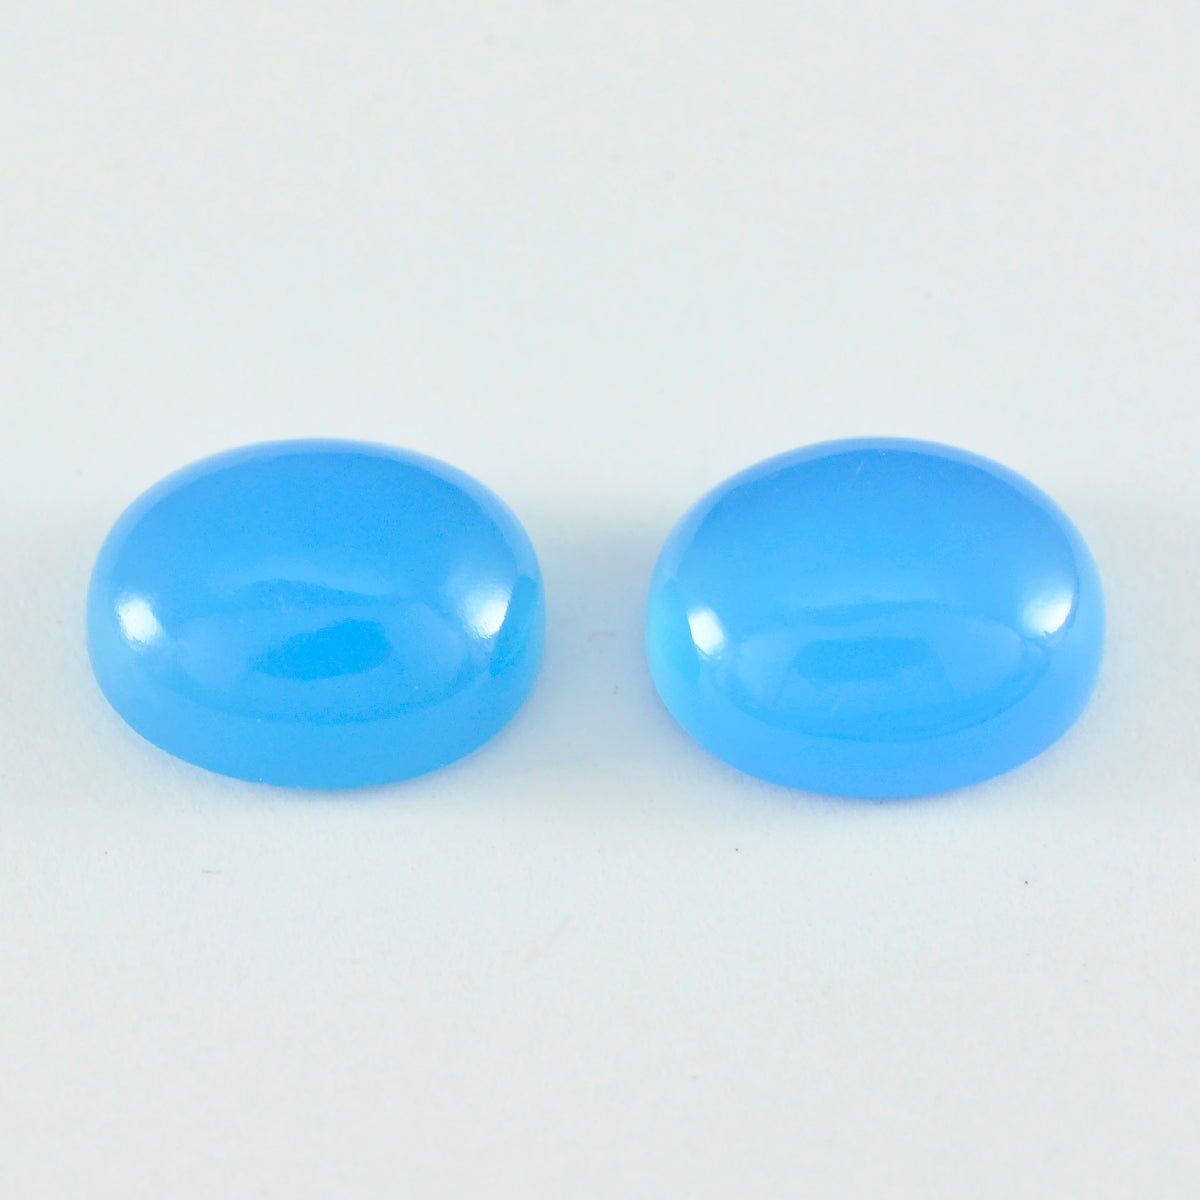 riyogems 1 st blå kalcedon cabochon 8x10 mm oval form fantastisk kvalitet lös ädelsten